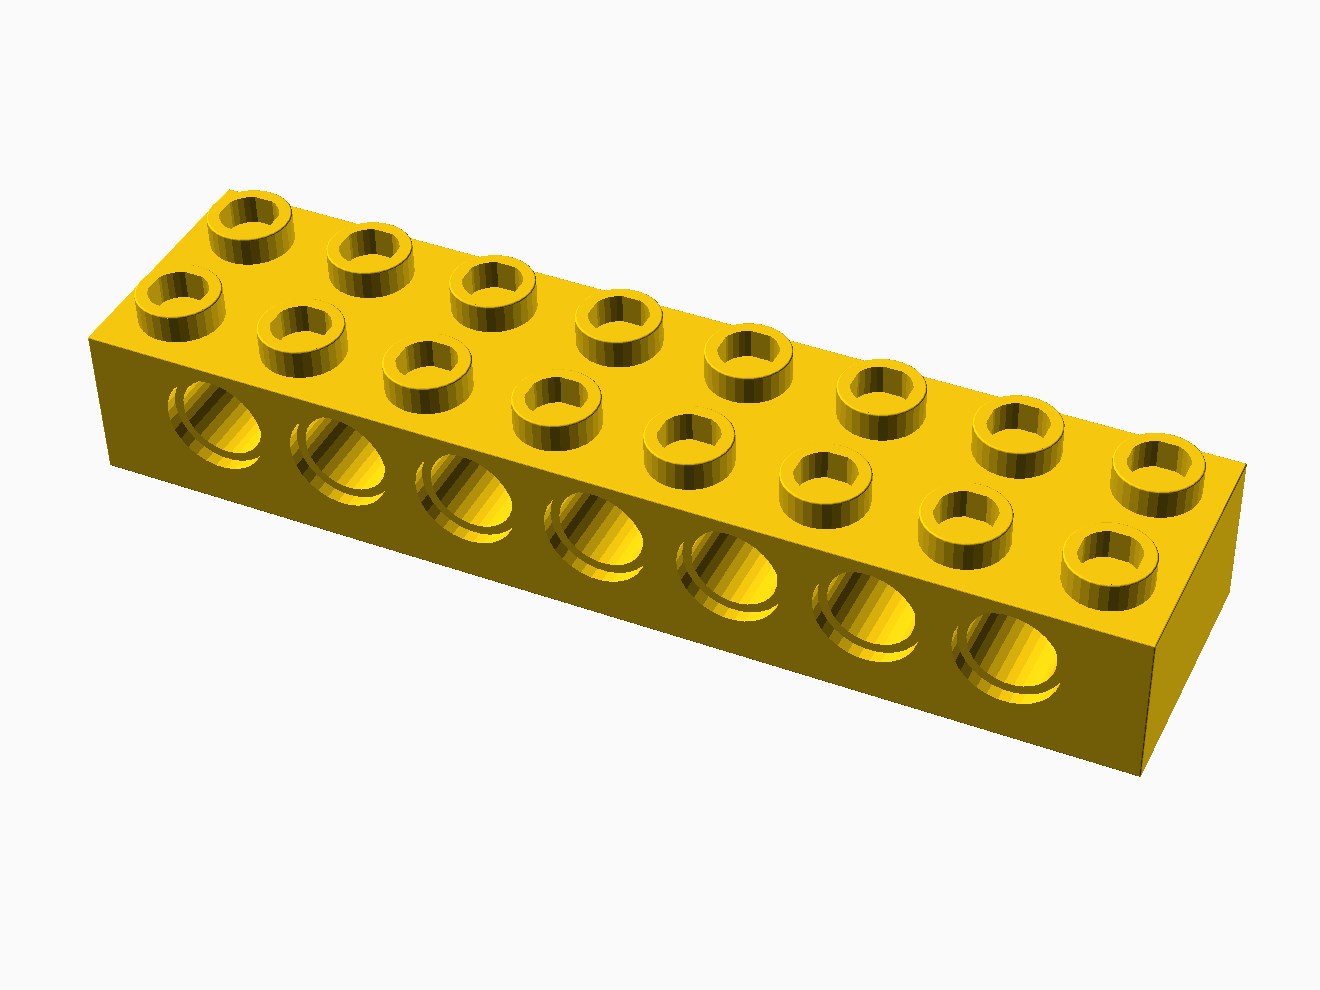 3D printable model of a LEGO Technic 8x2 Brick.